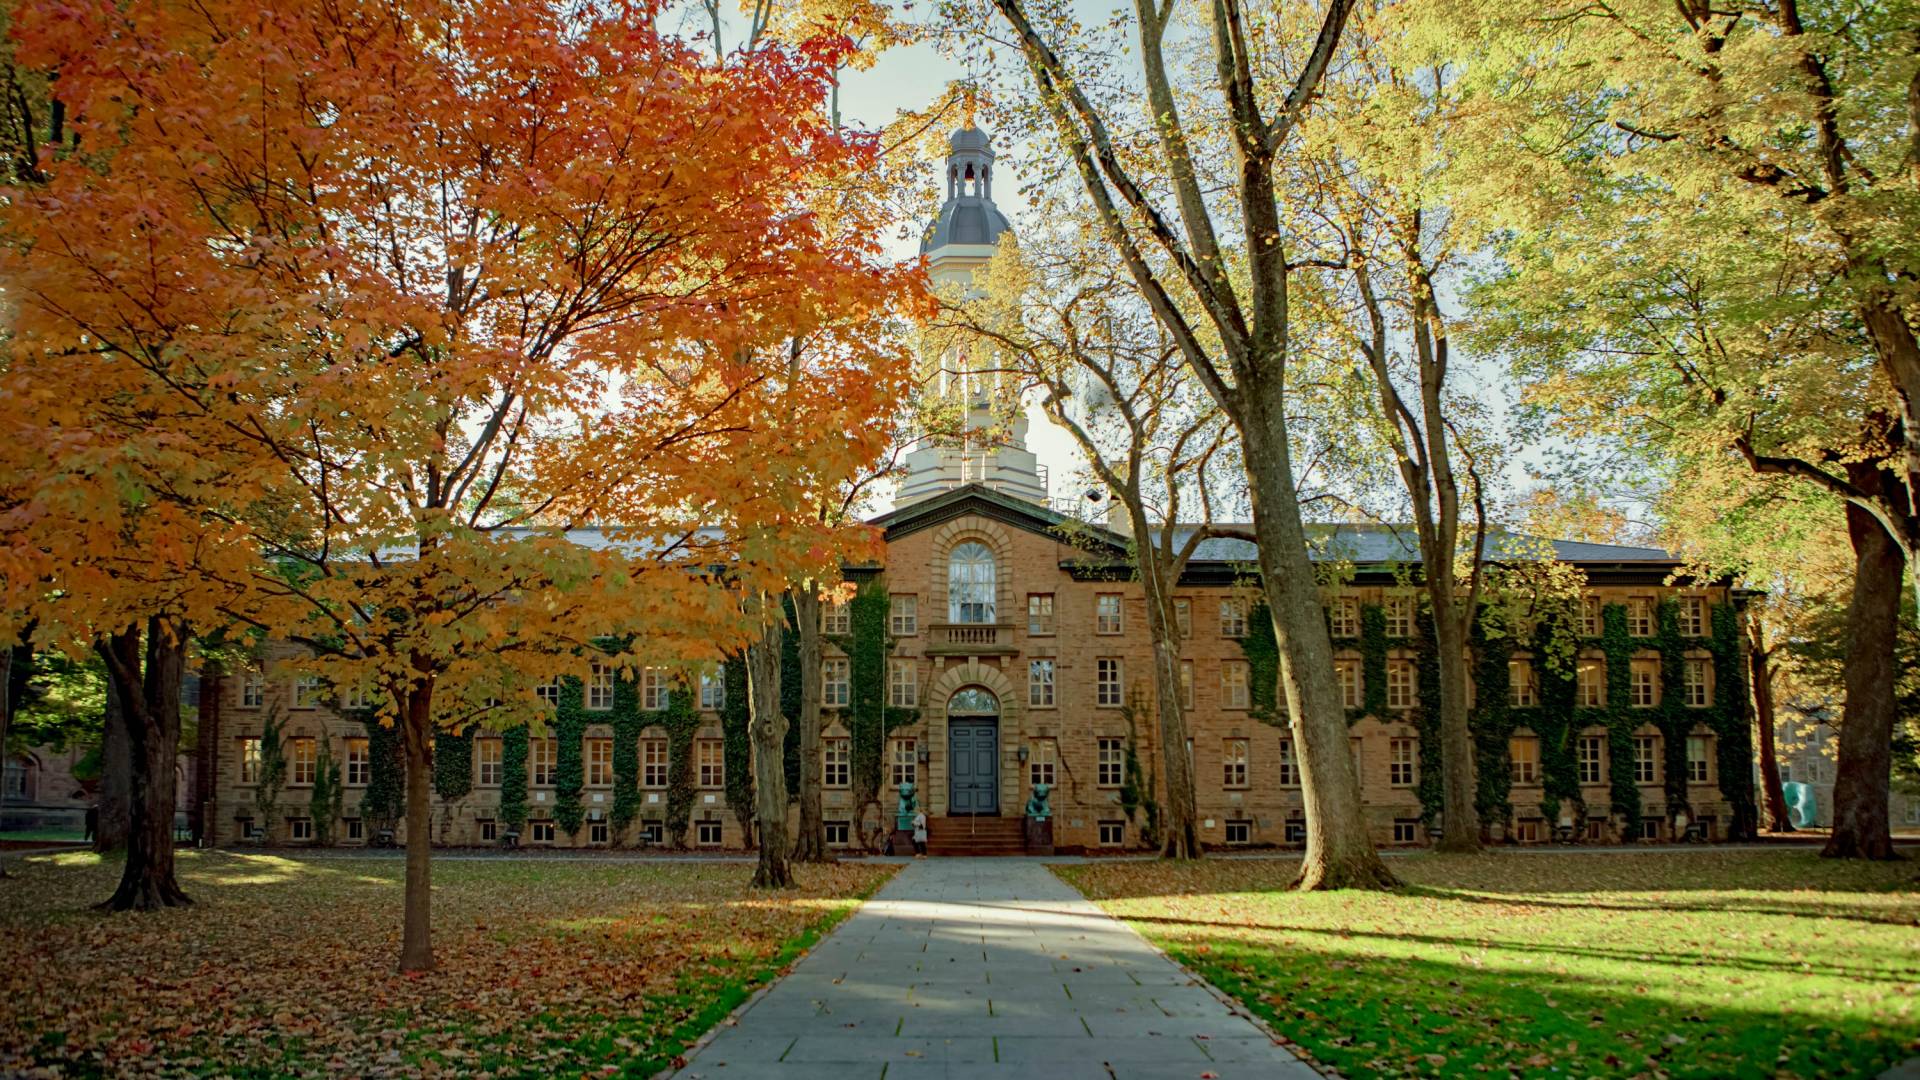 Nassau Hall in autumn